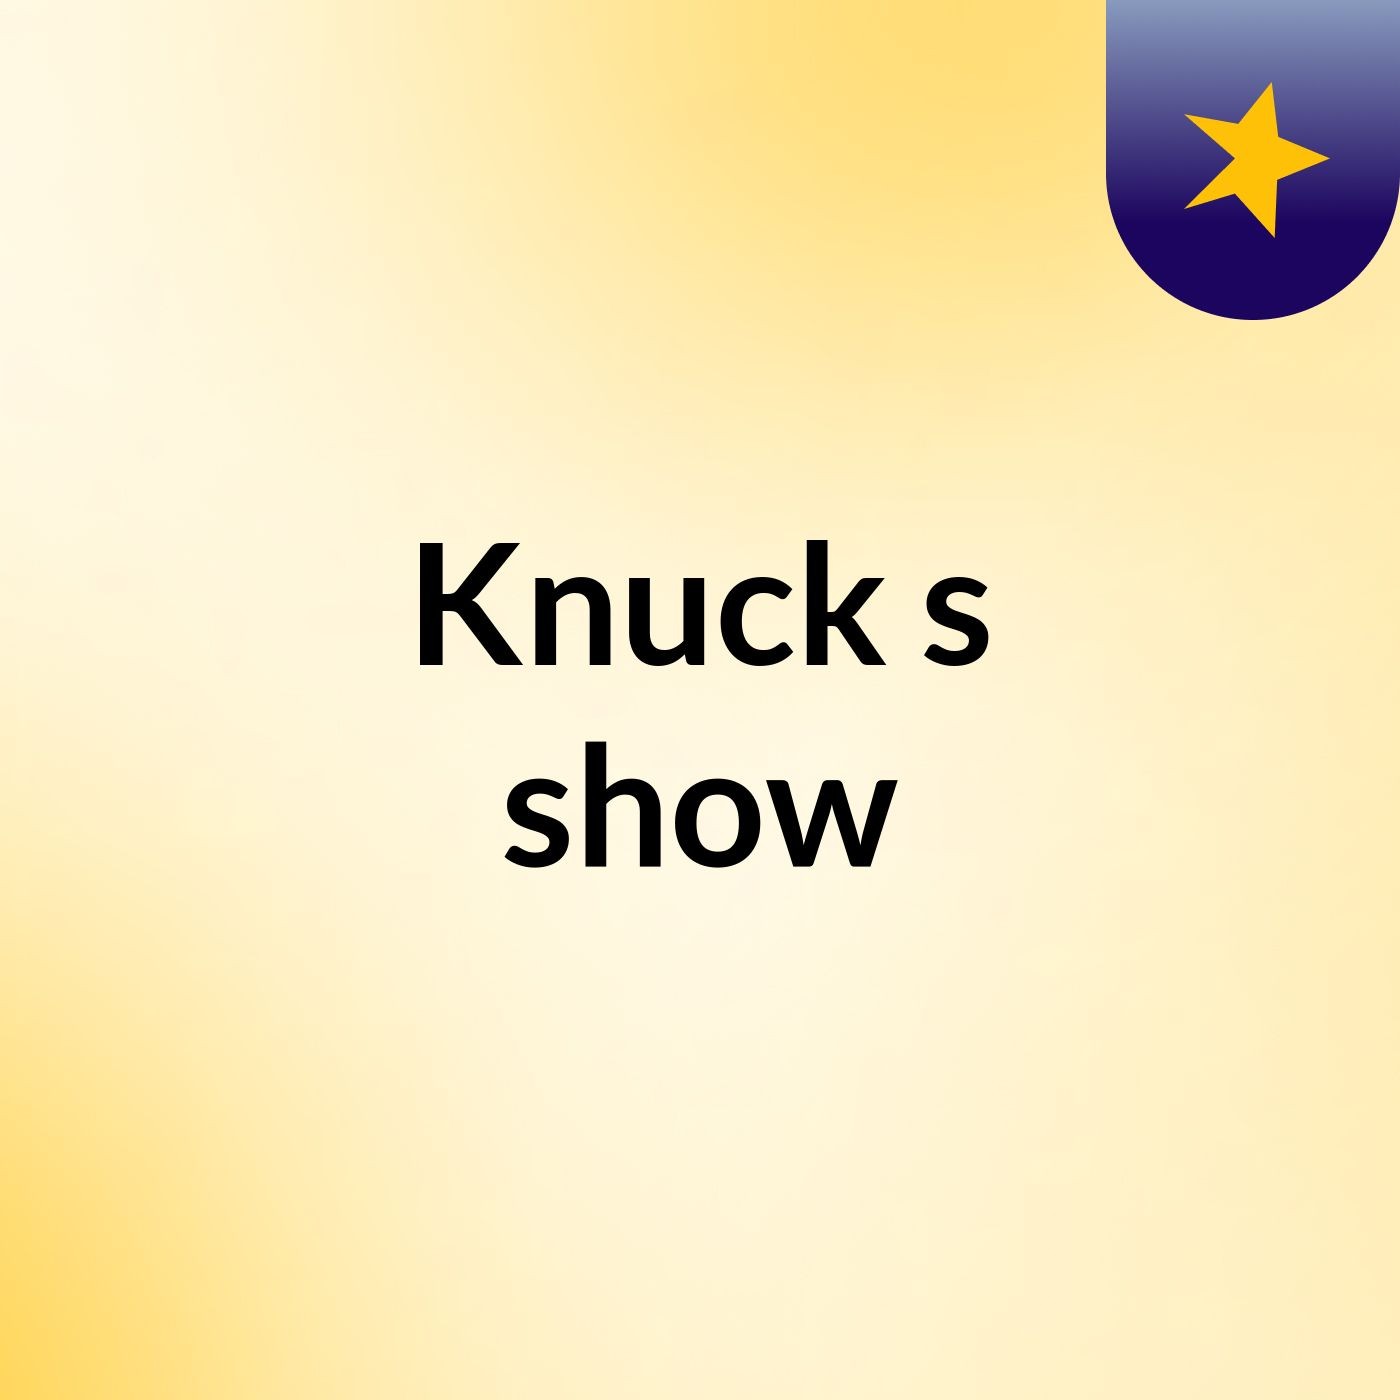 Knuck's show